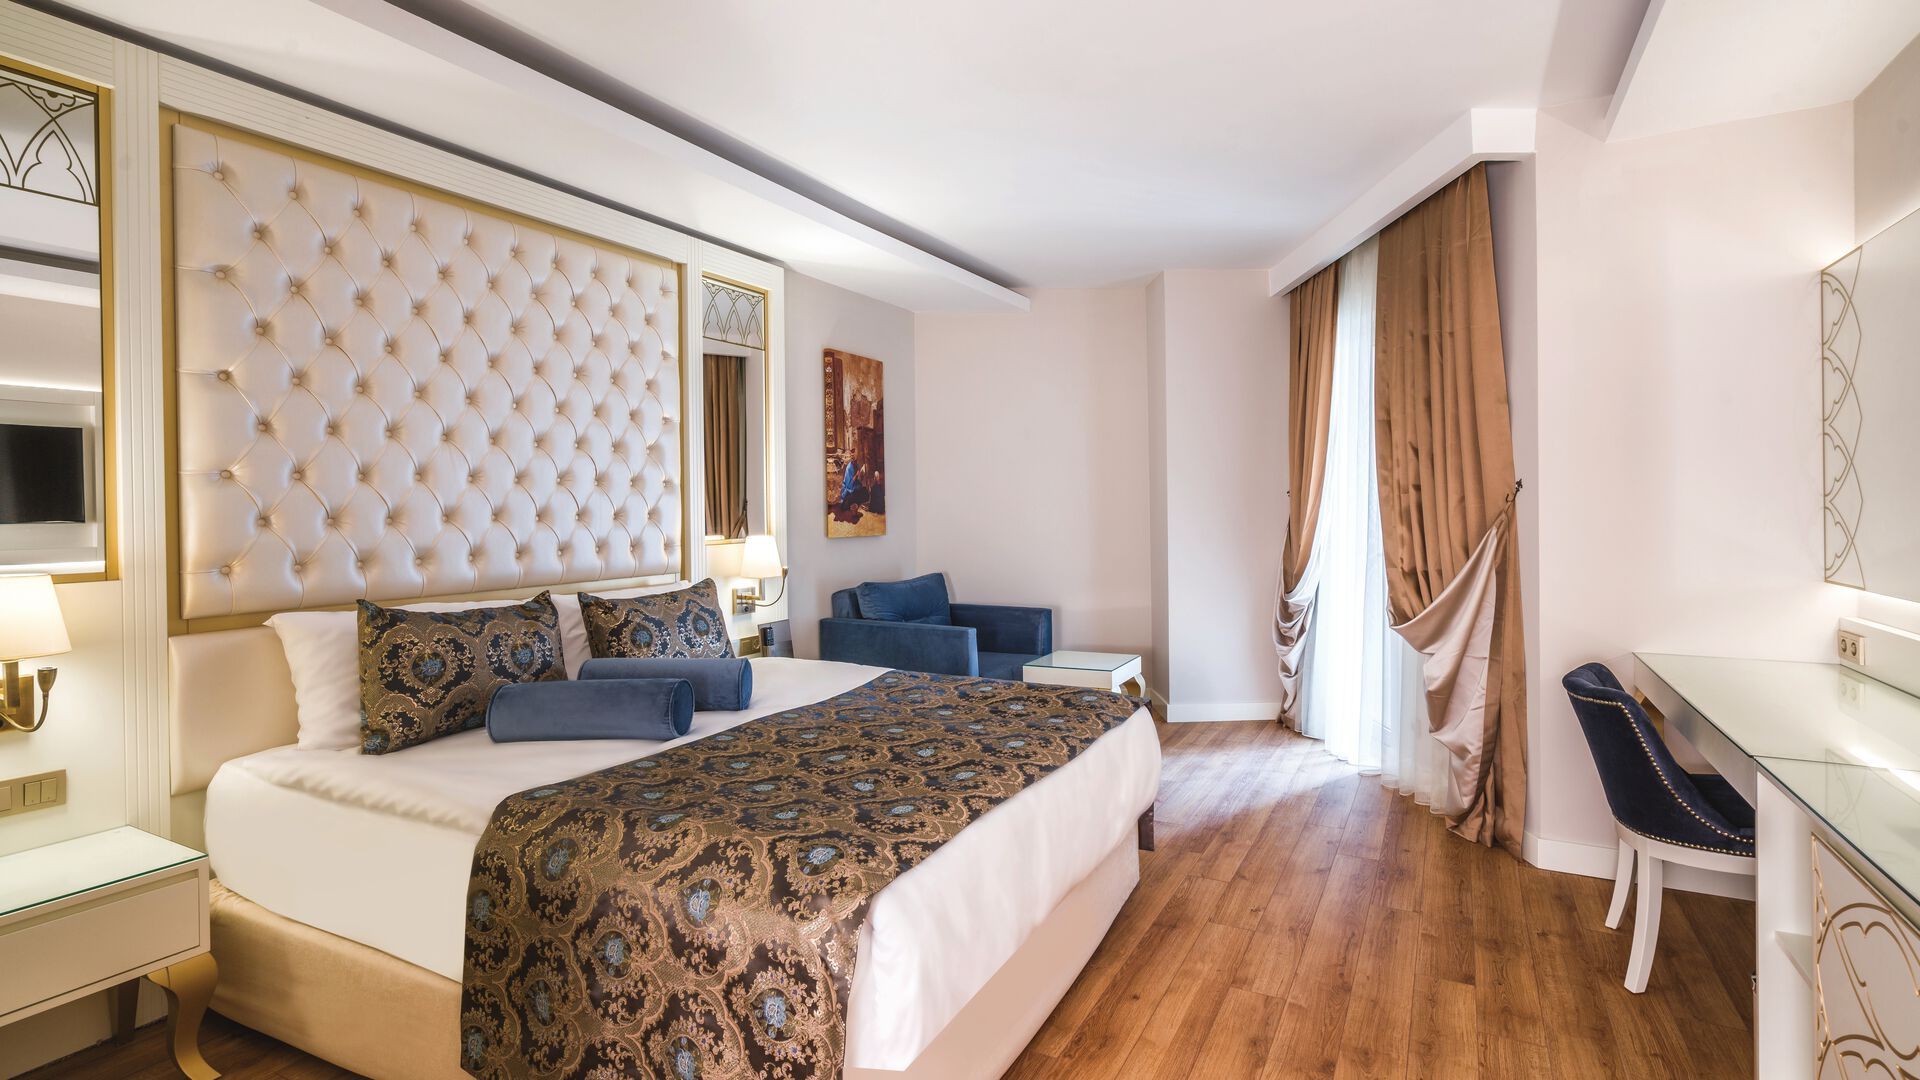 Turquie - Alanya - Hotel Haydarpasha Palace 5*